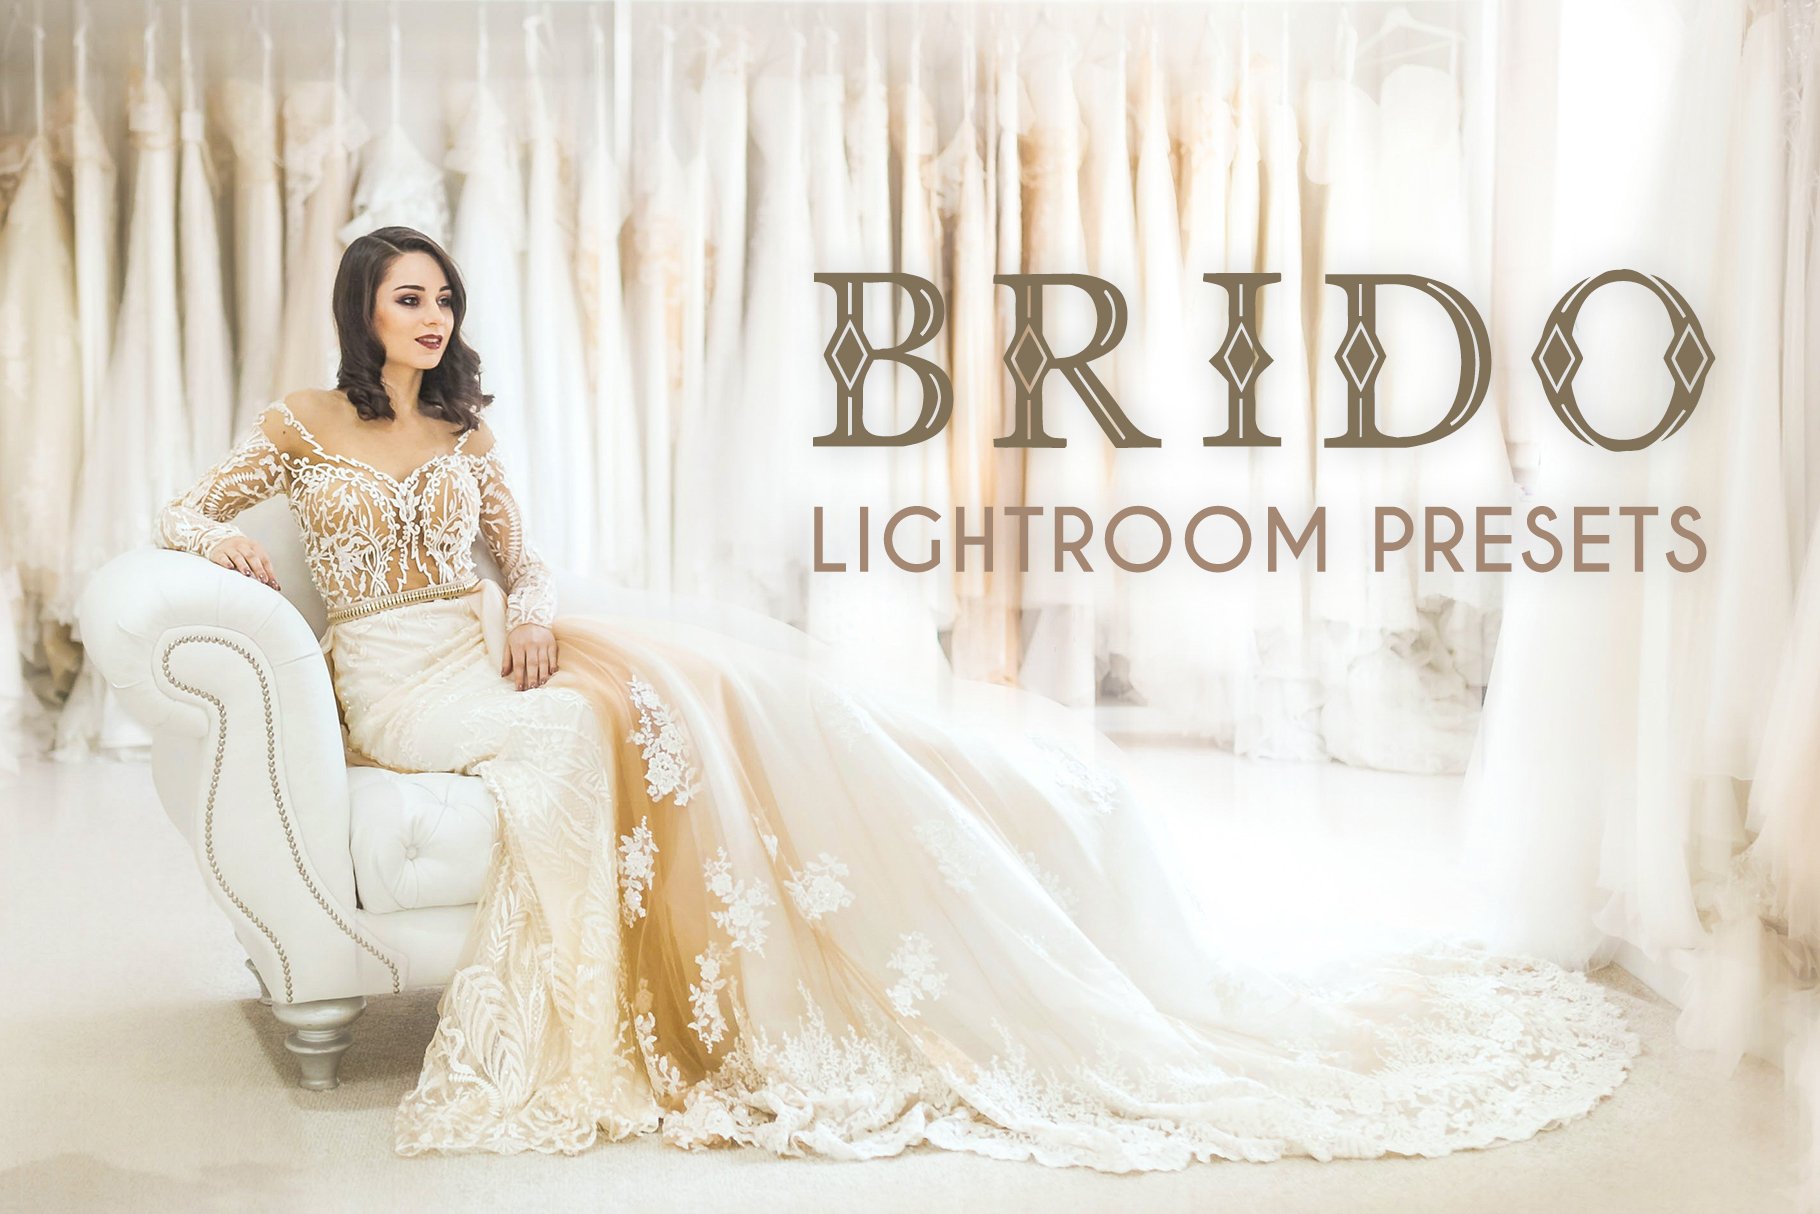 Brido Lightroom Presetscover image.